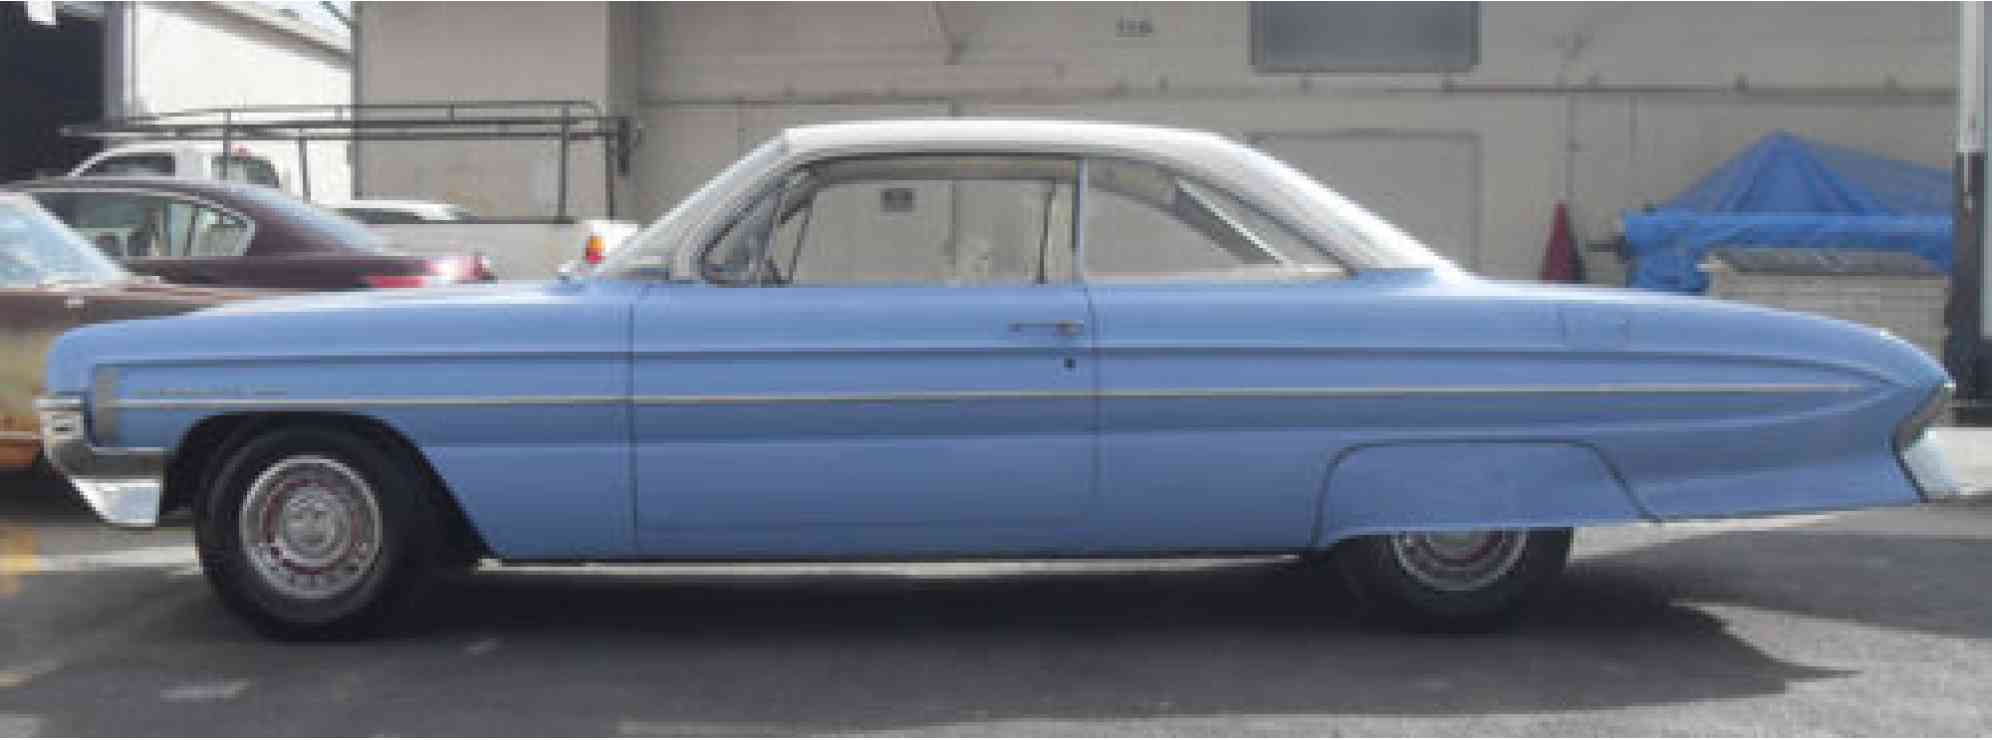 1961 Oldsmobile Eighty-Eight Holiday Coupe, Celebrity Sedan